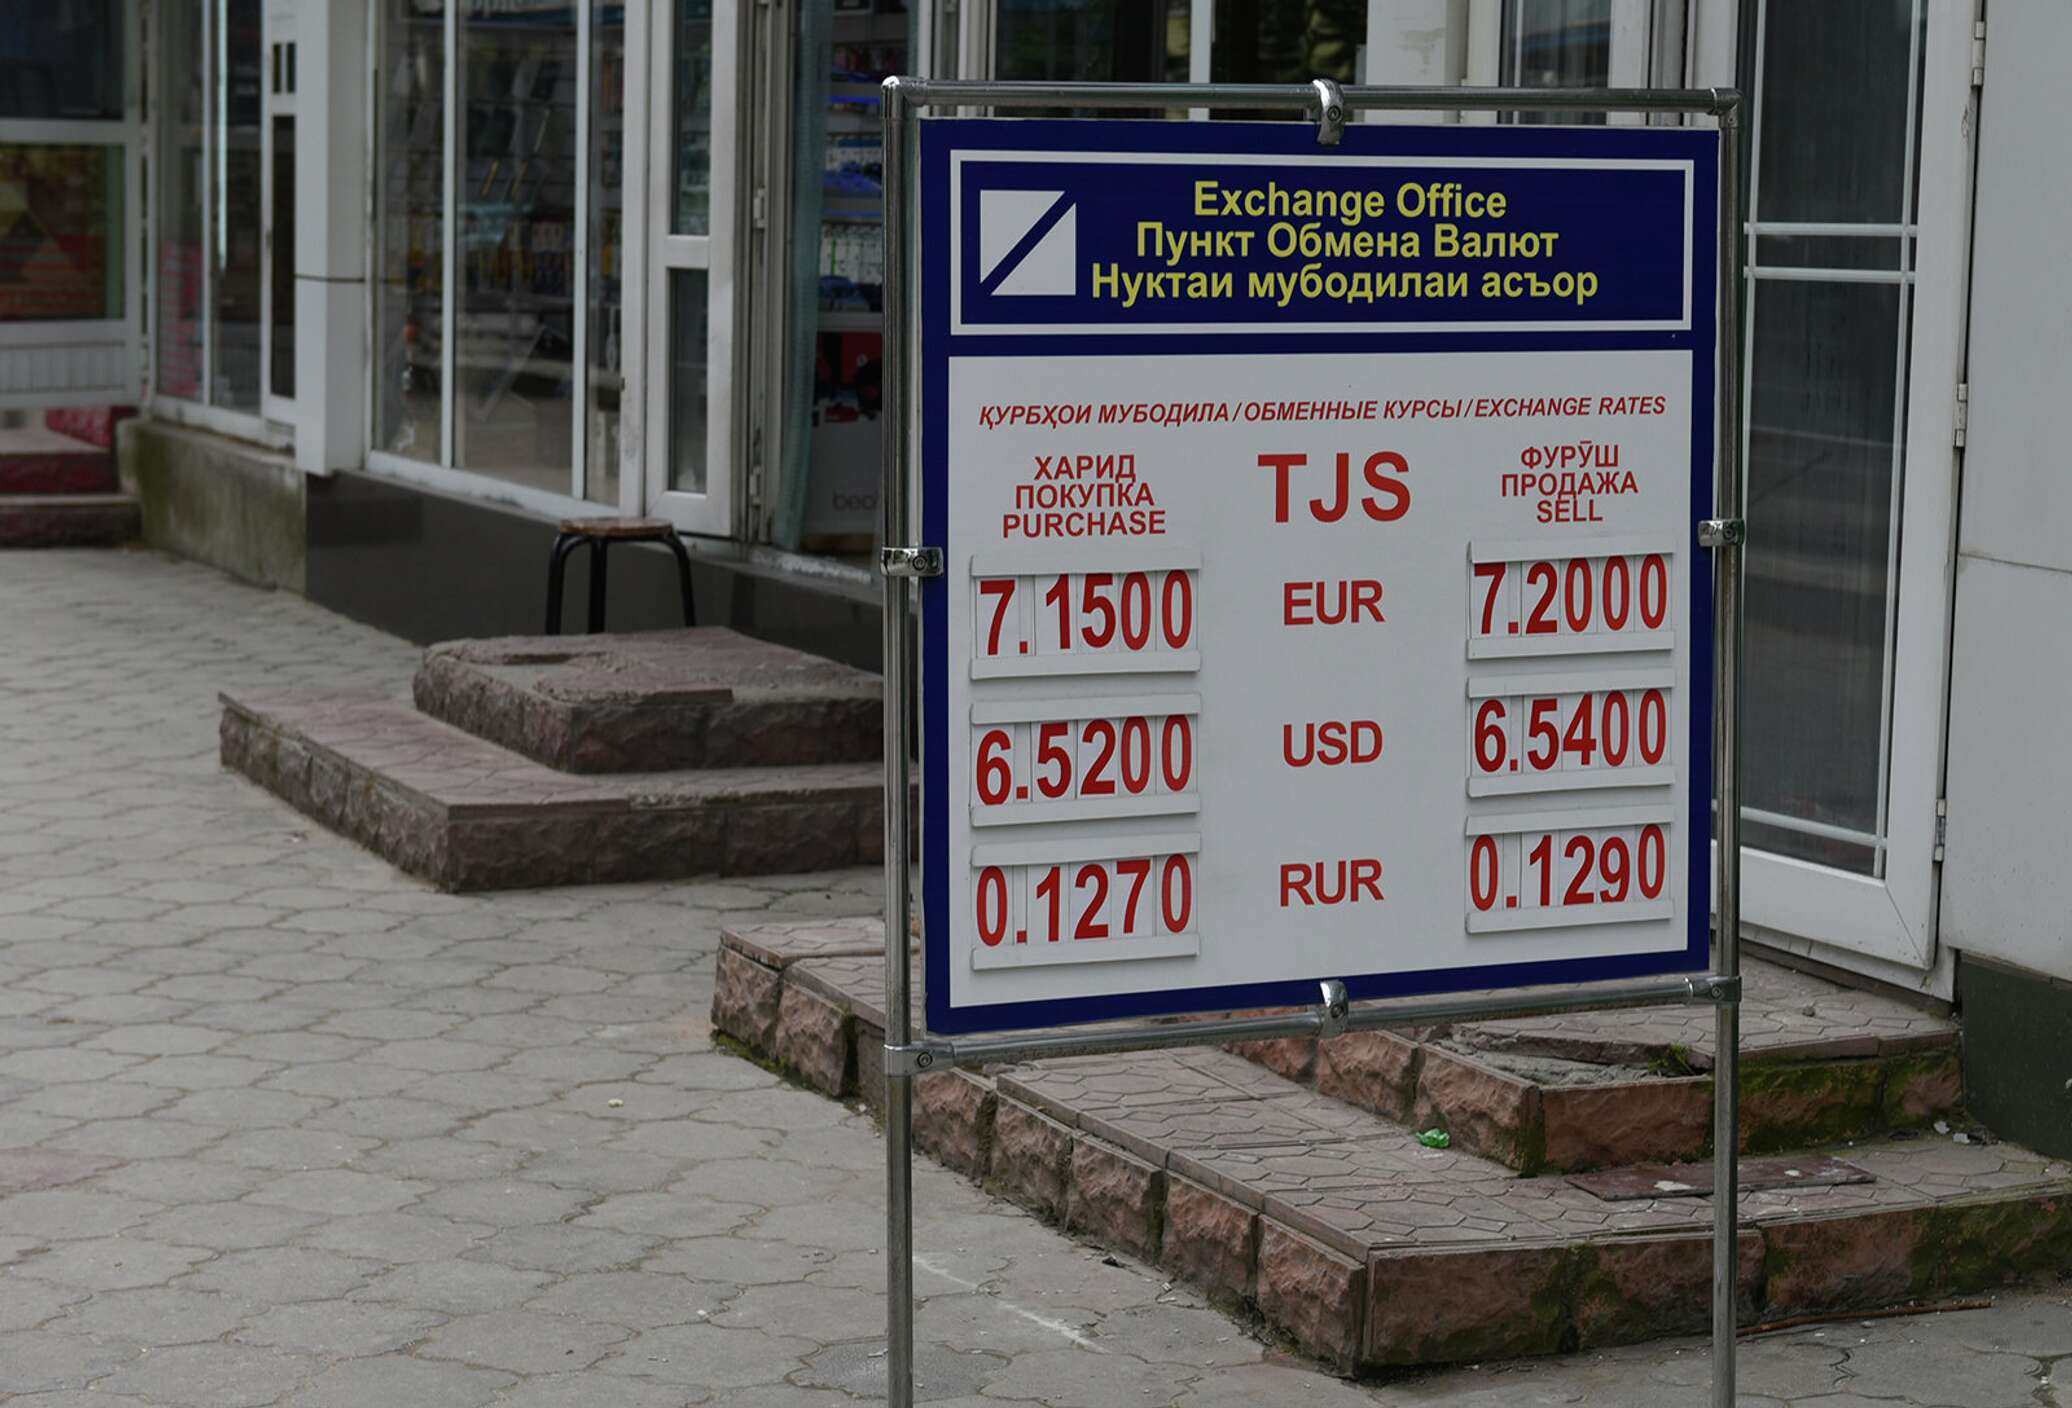 Курс доллара рублю таджикистан. Обменный пункт. Обменные пункты в Таджикистане. Курсы валют. Курсы валют в Таджикистане.